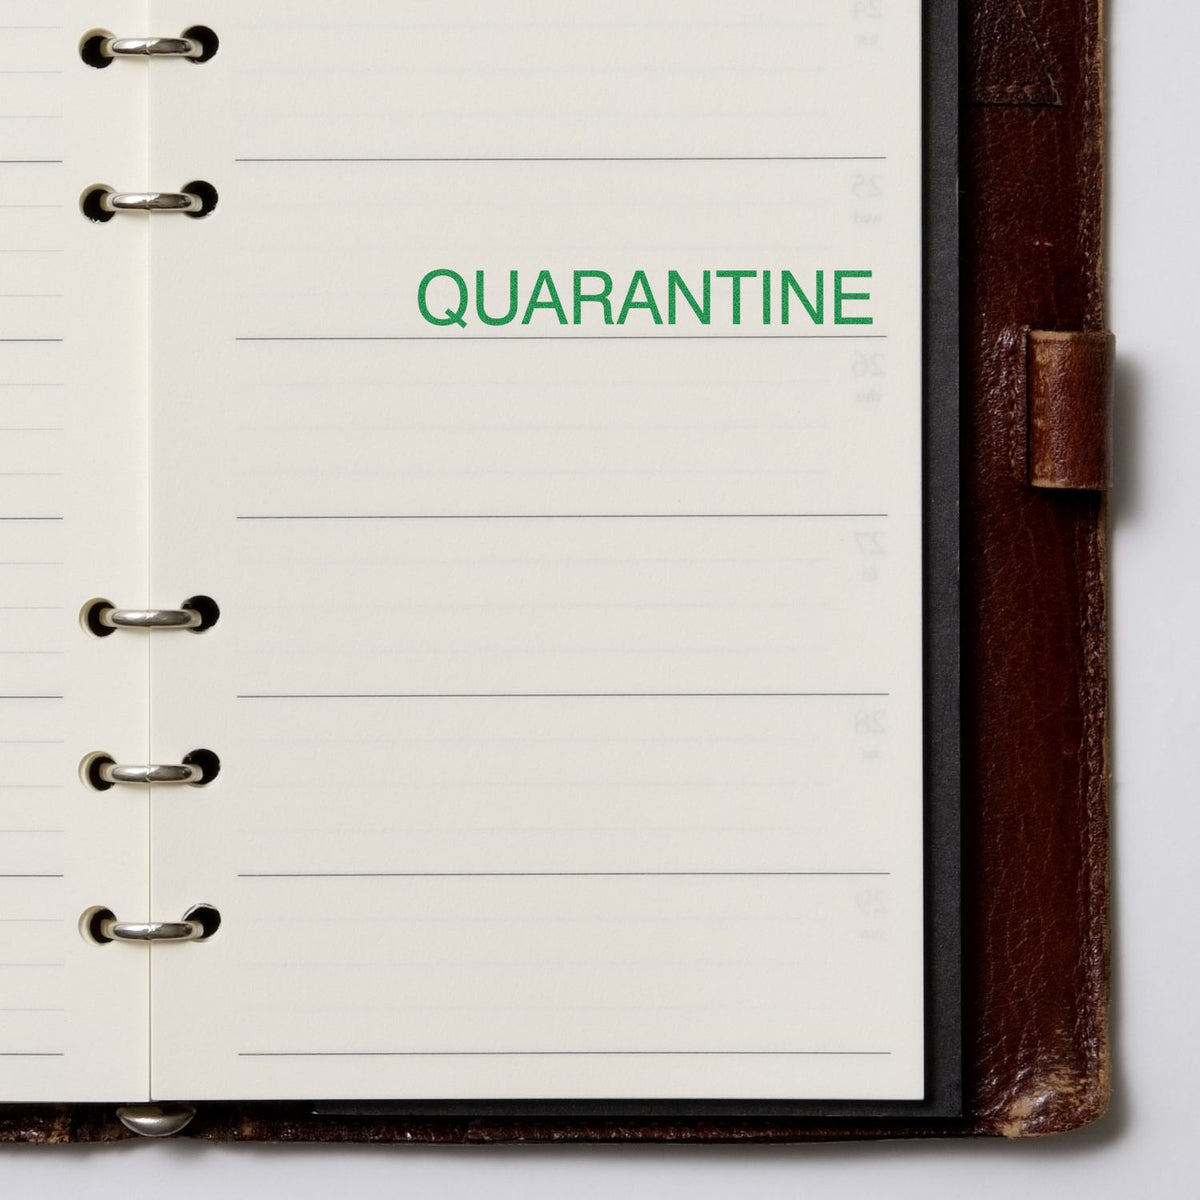 Quarantine Rubber Stamp In Use